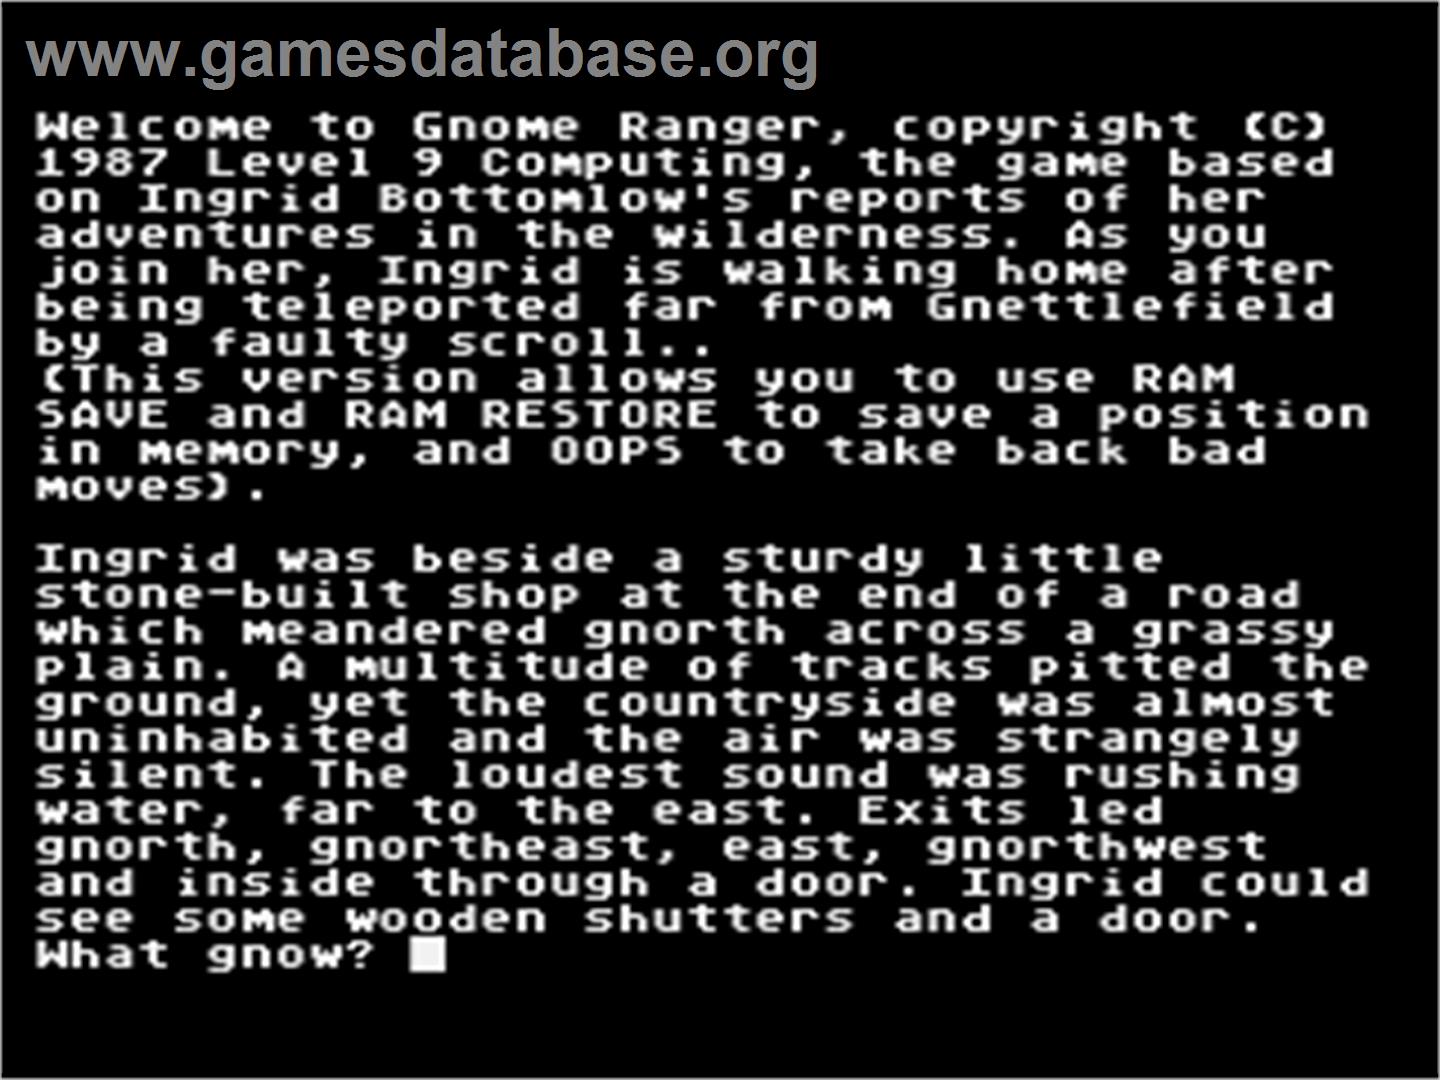 Gnome Ranger - Atari 8-bit - Artwork - Title Screen